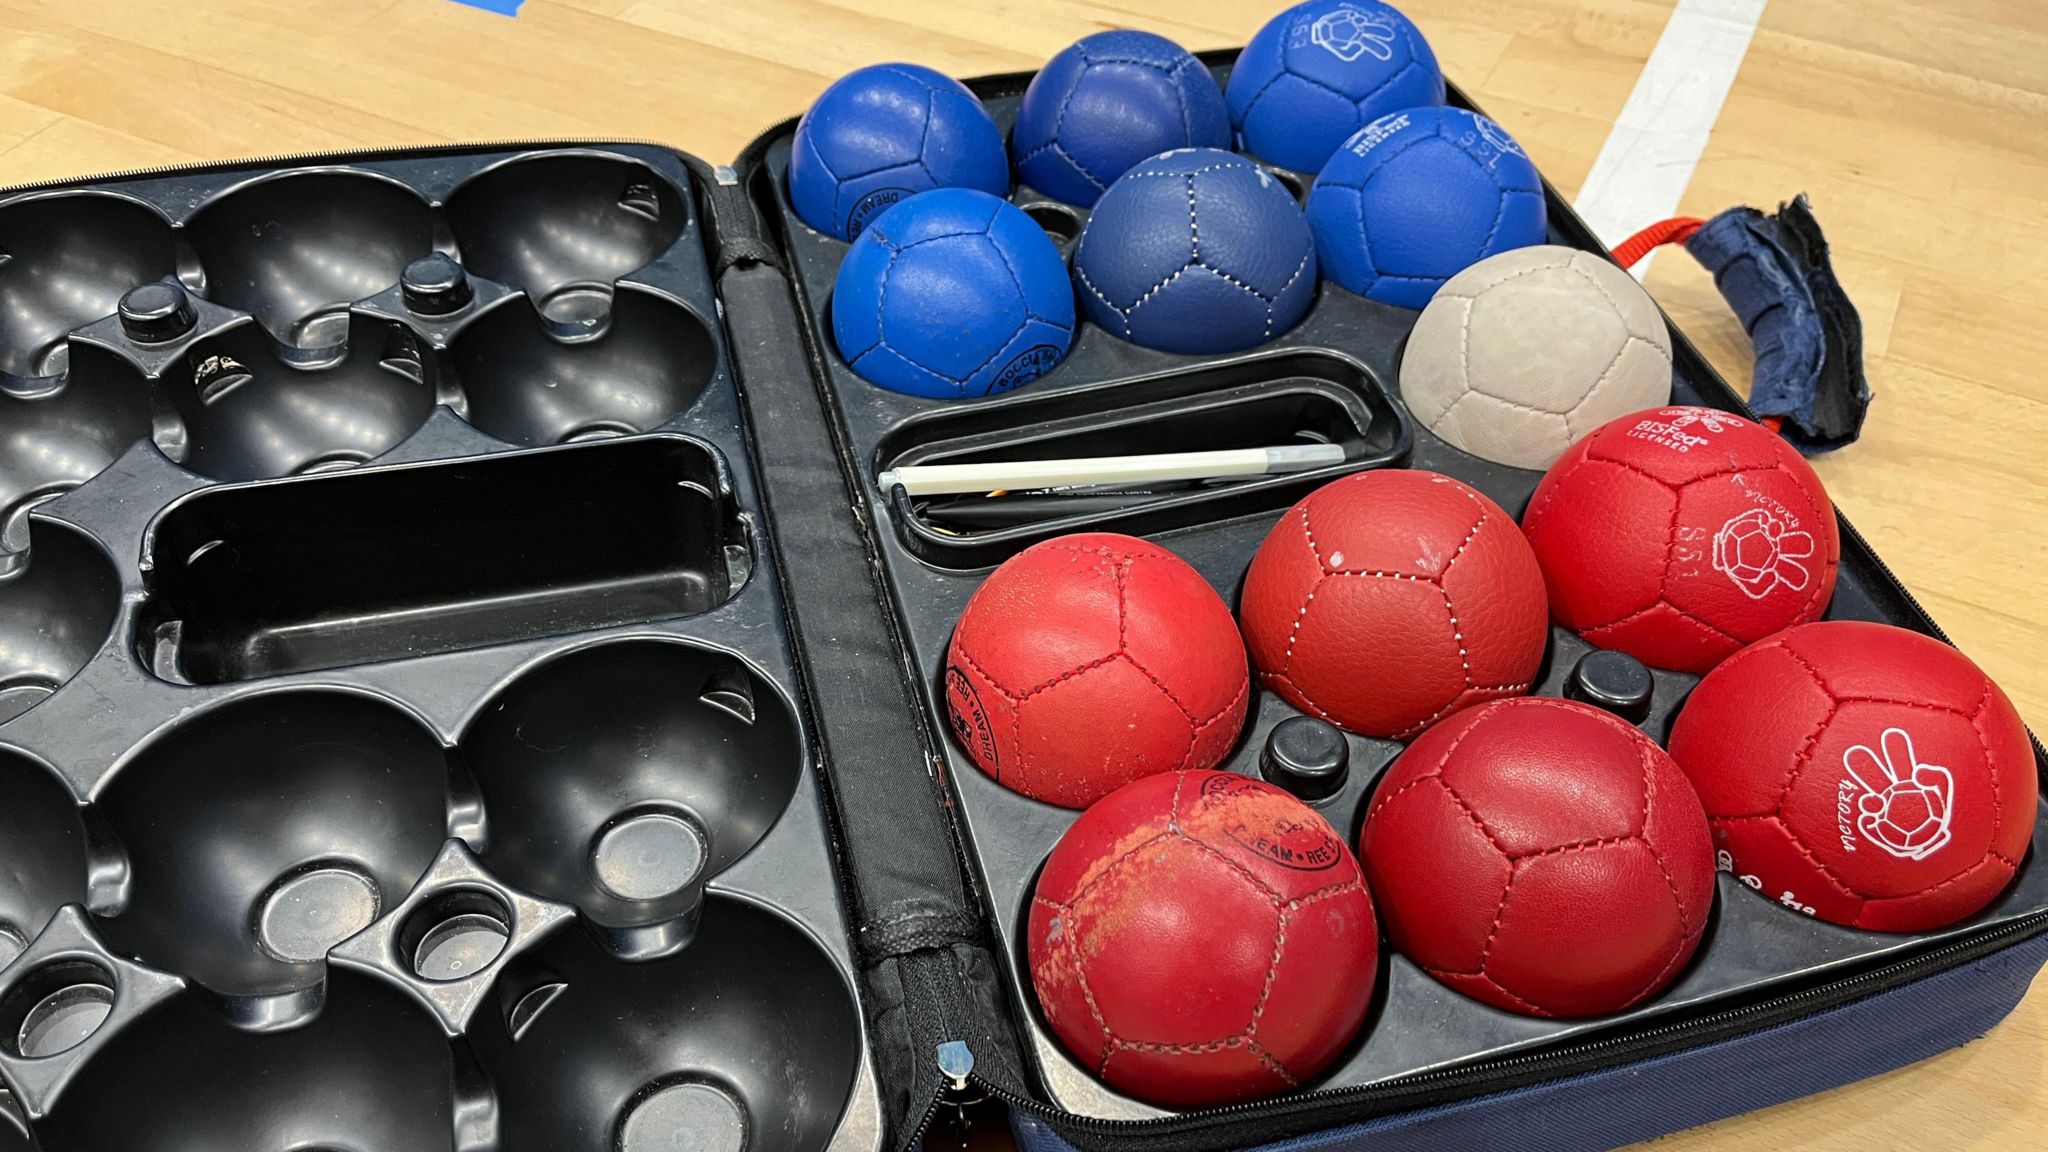 The coloured balls Boccia players use